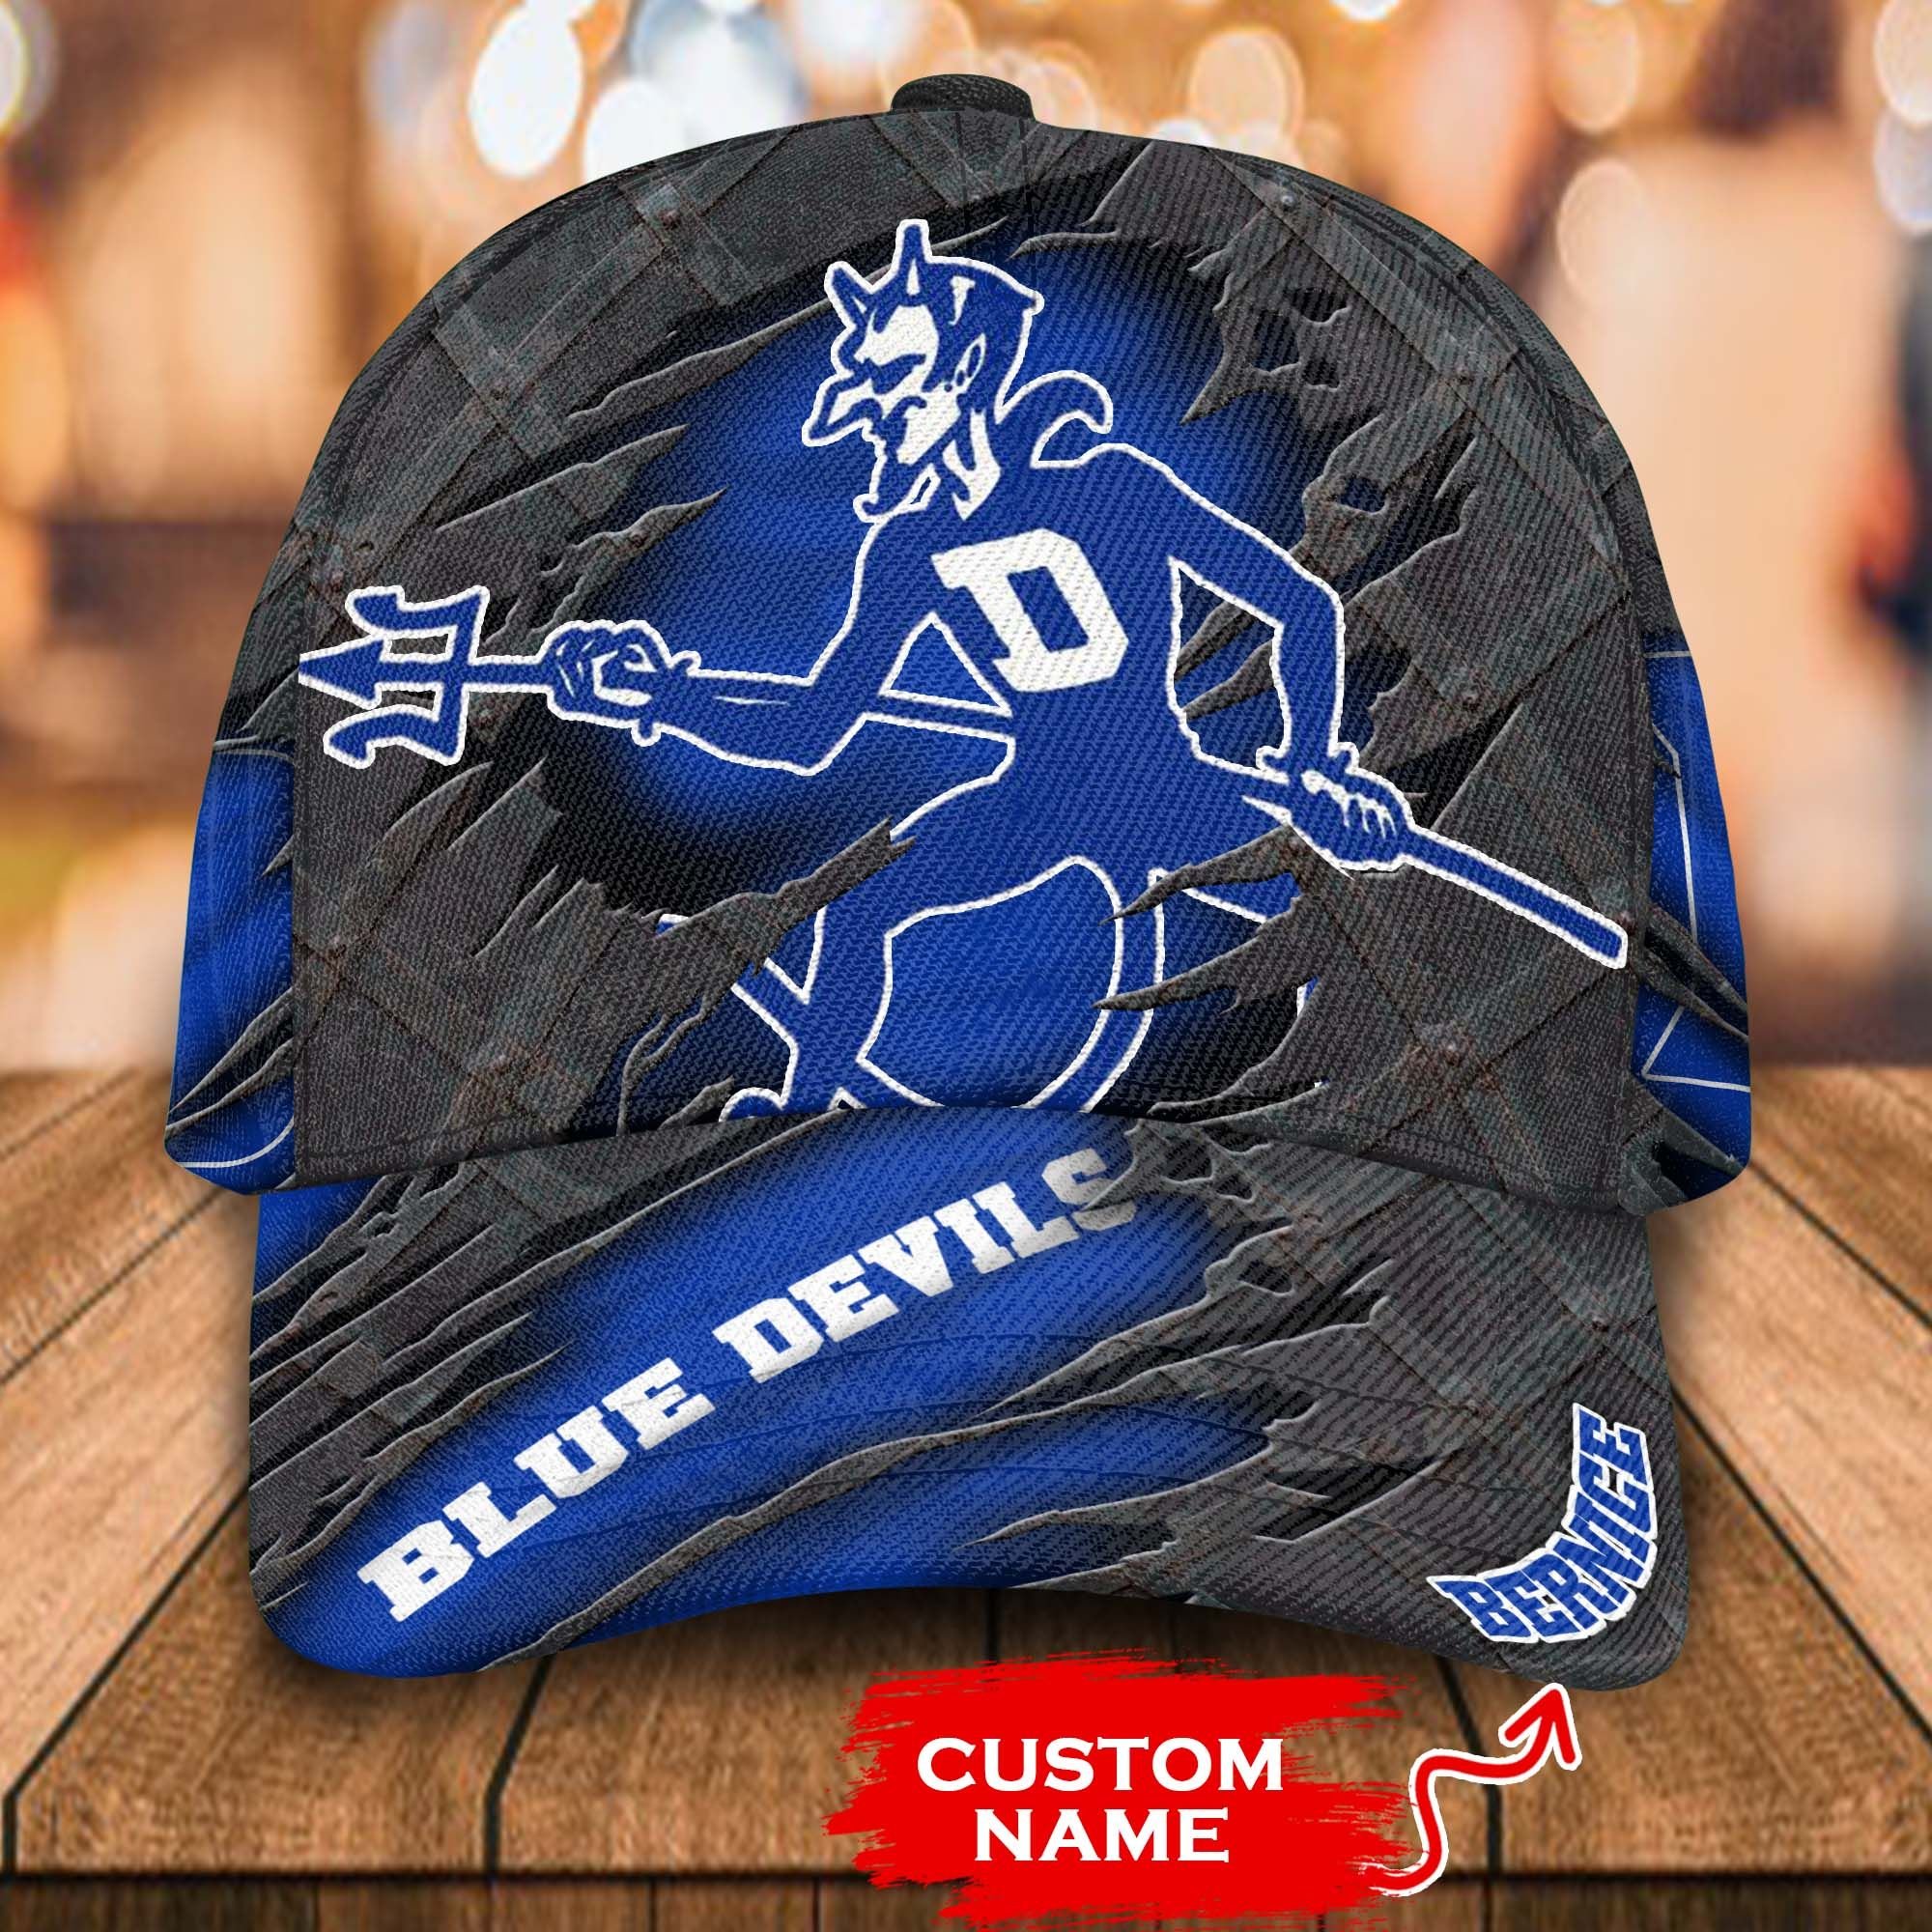 Personalized NCAA1 Duke Blue Devils 3D Mascost Custom name Cap 1